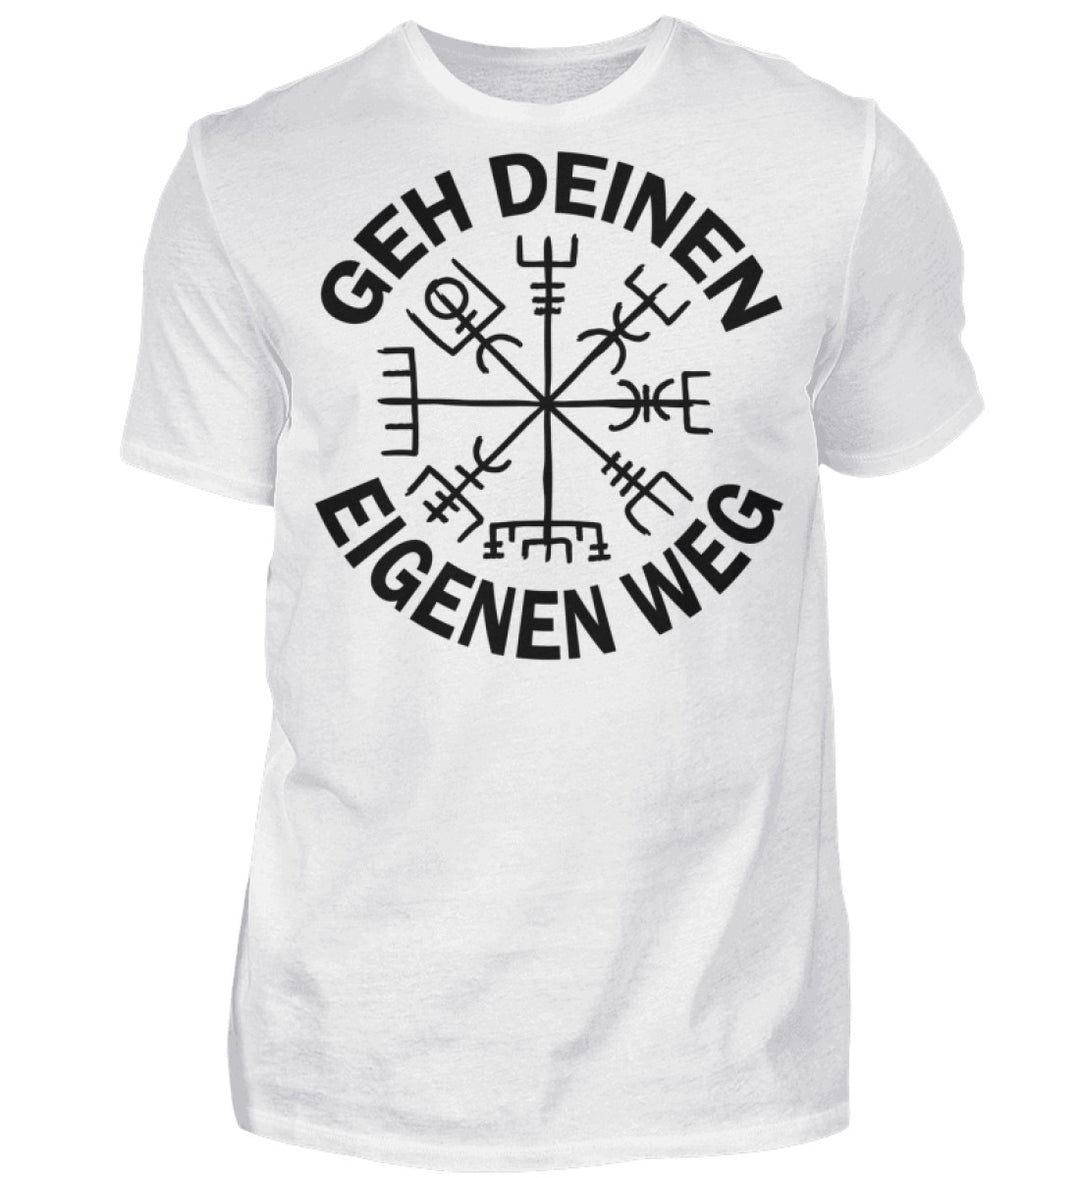 GEH DEINEN WEG  - Herren Shirt